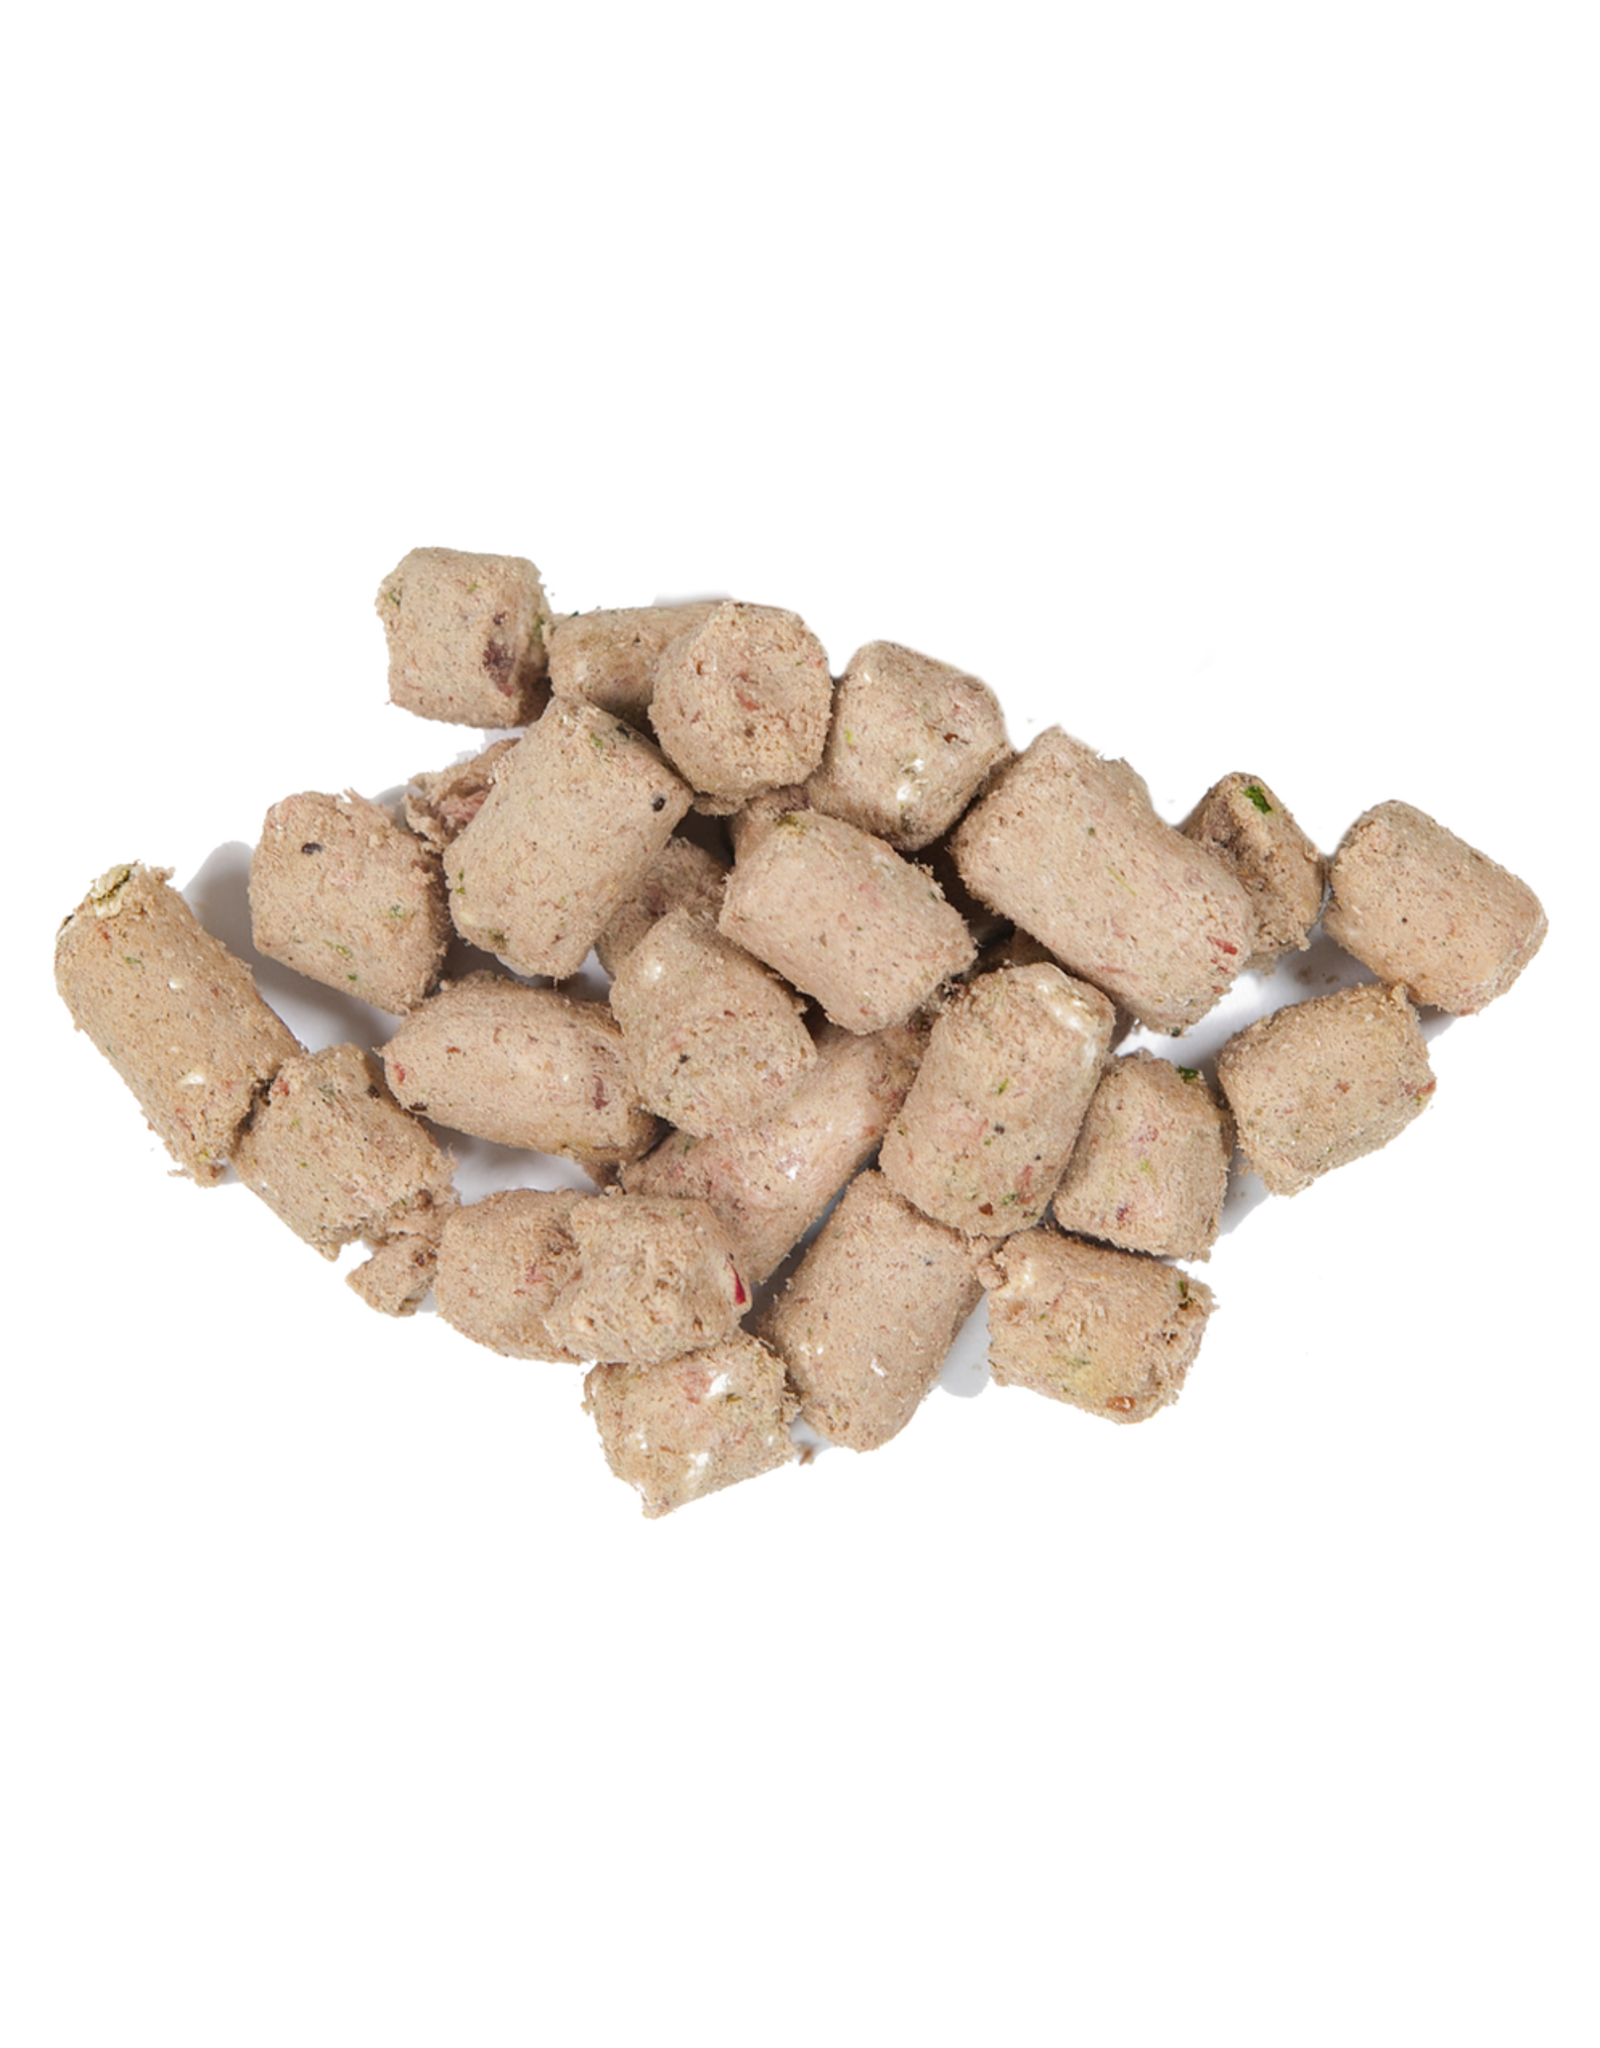 The New Zealand Natural Pet Food Company Meow Freeze Dried Lamb Green Tripe w/Green Lipped Mussels Cat Treats 1.4oz